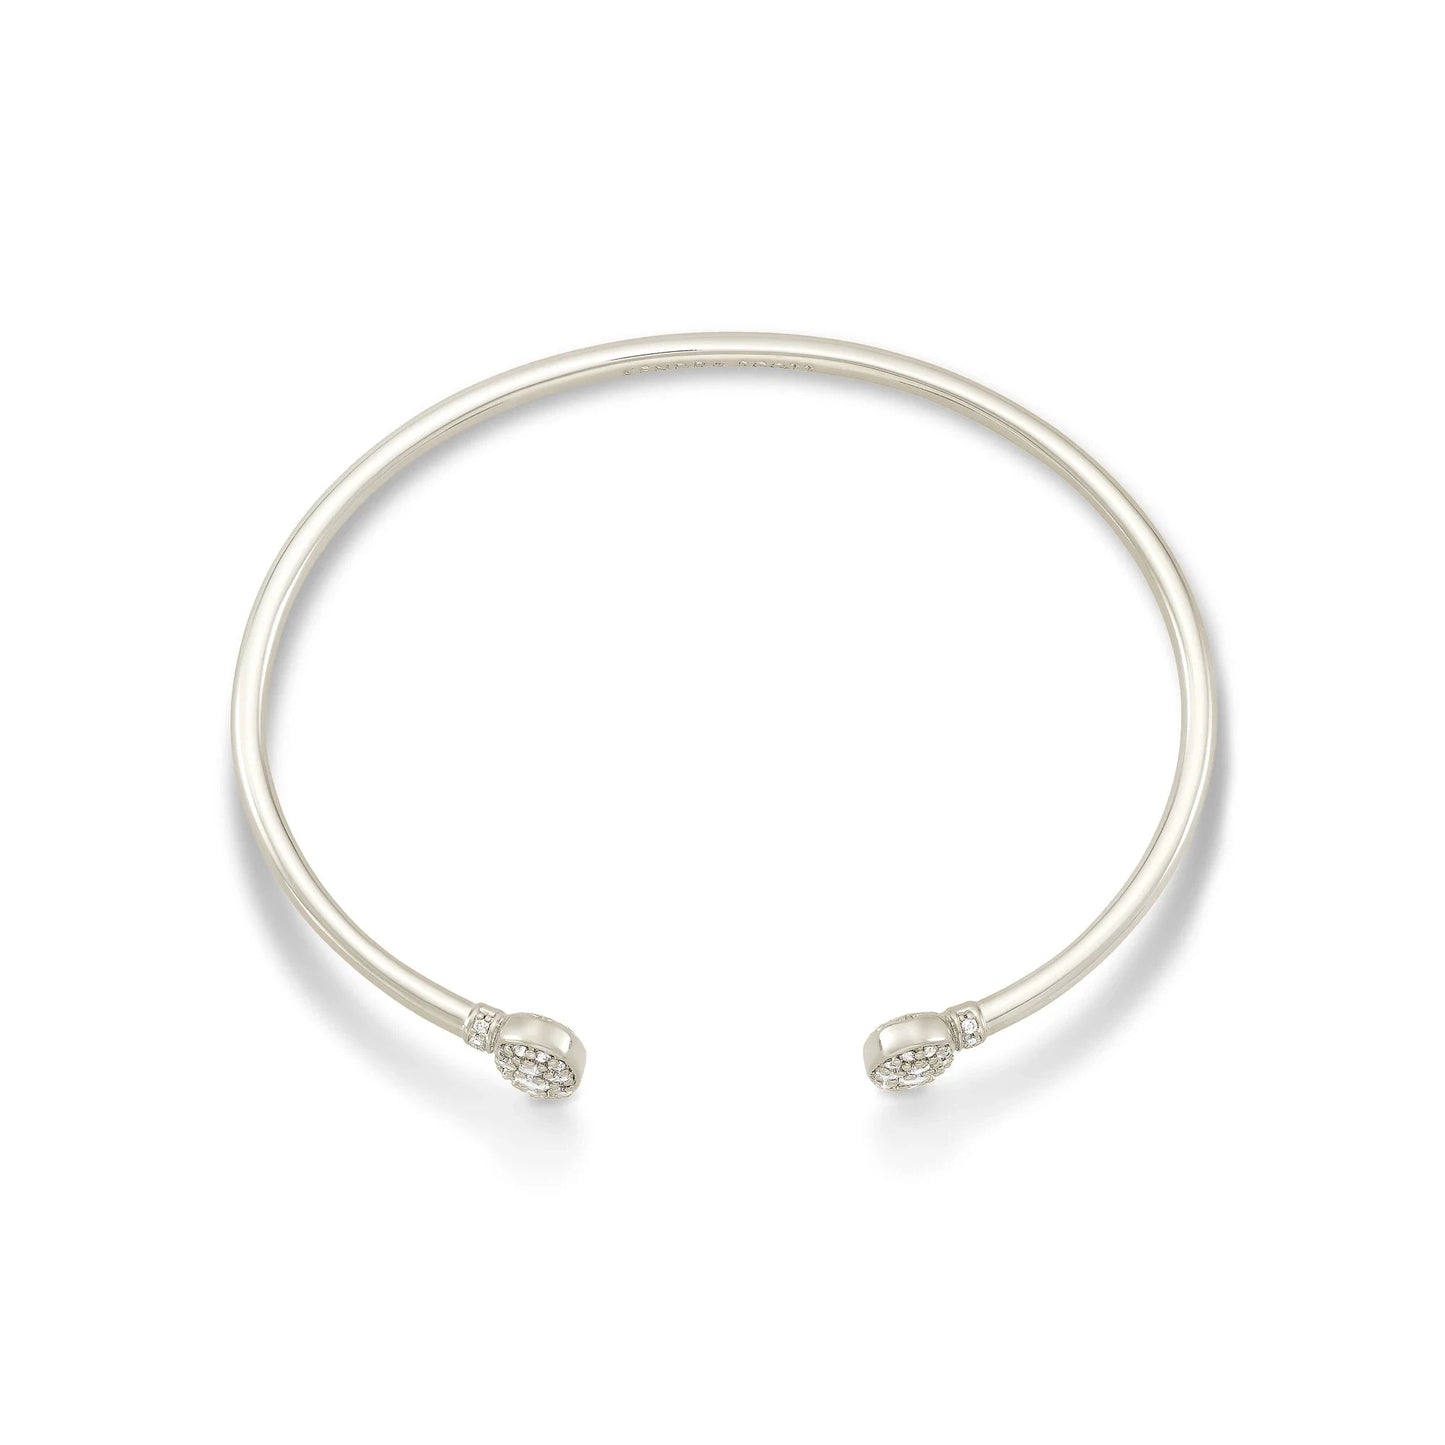 Kendra Scott Grayson White Crystal Cuff Bracelet, Silver